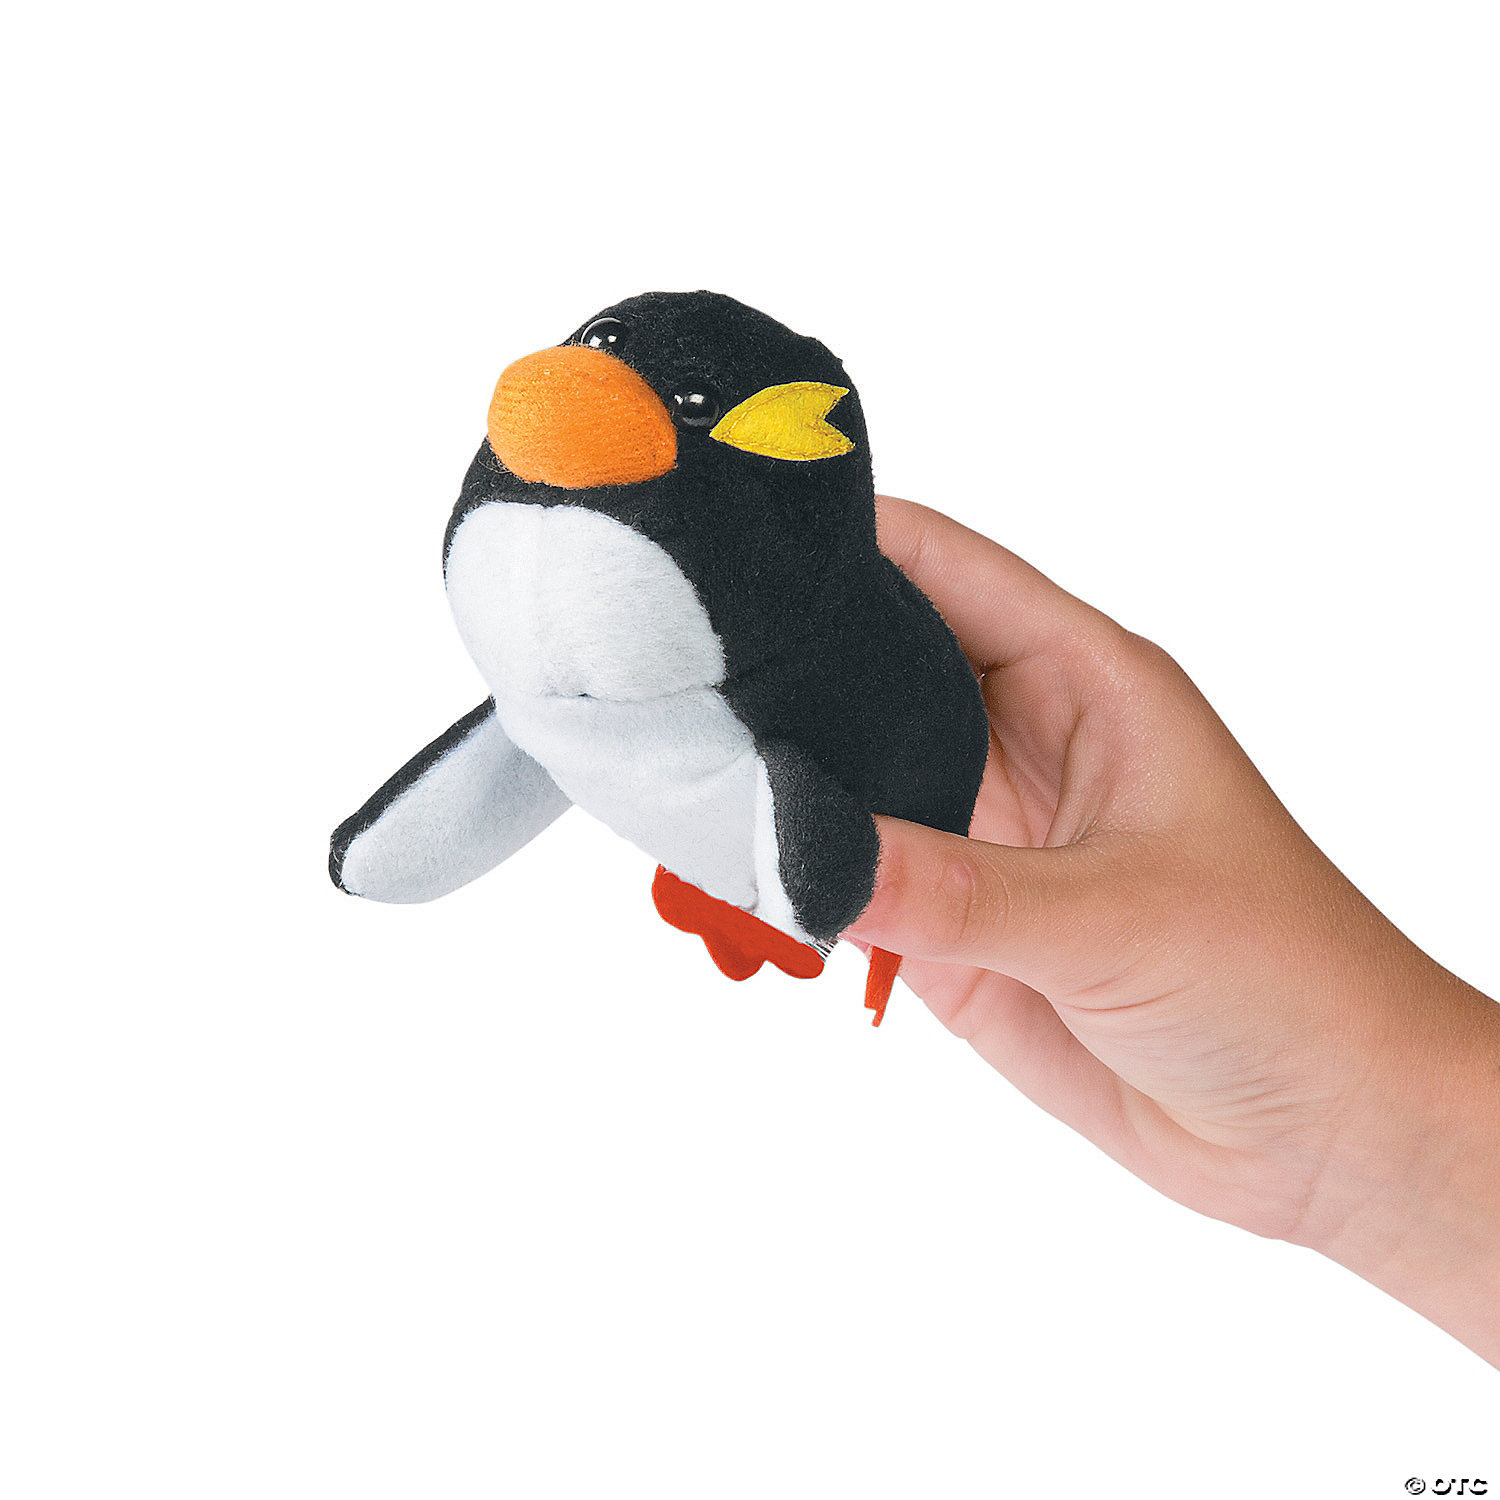 stuffed penguins for sale